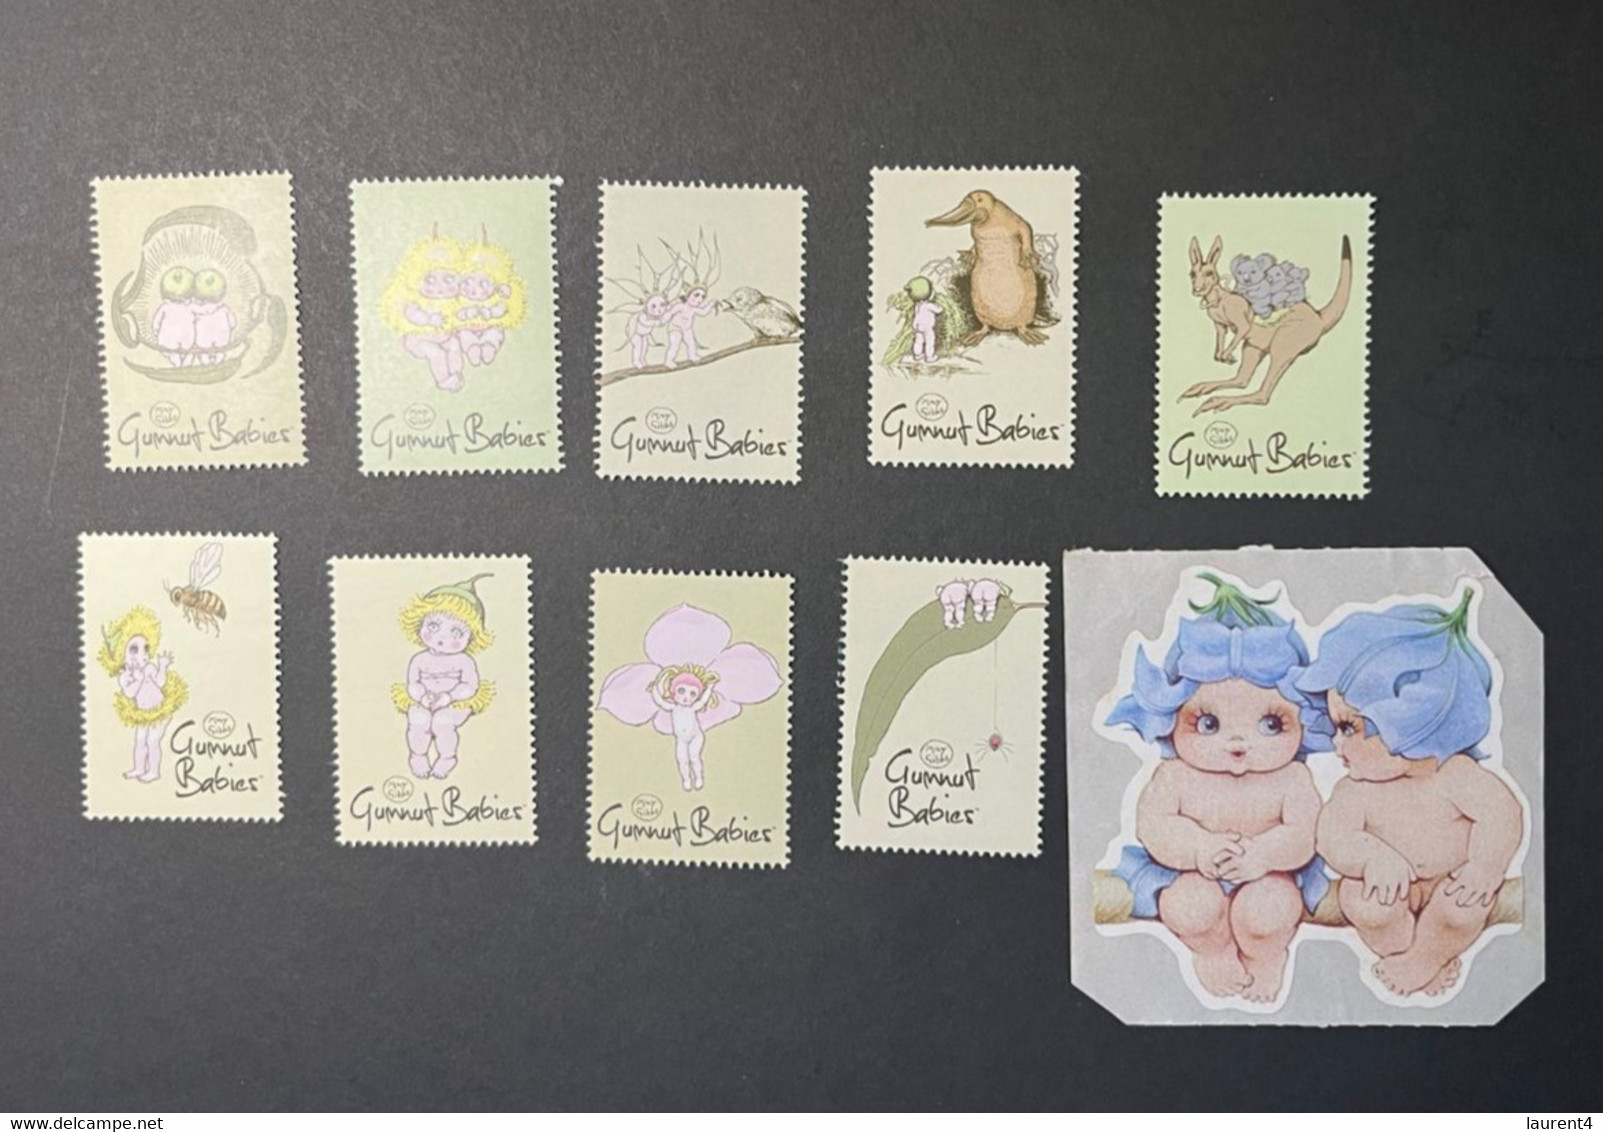 (STAMPS 7-1-2023) Australia - May Gibbs - Gumnut Babies Cinderella (TAG) 9 (mint) As Seen On Scan + 1 Sticker - Cinderellas